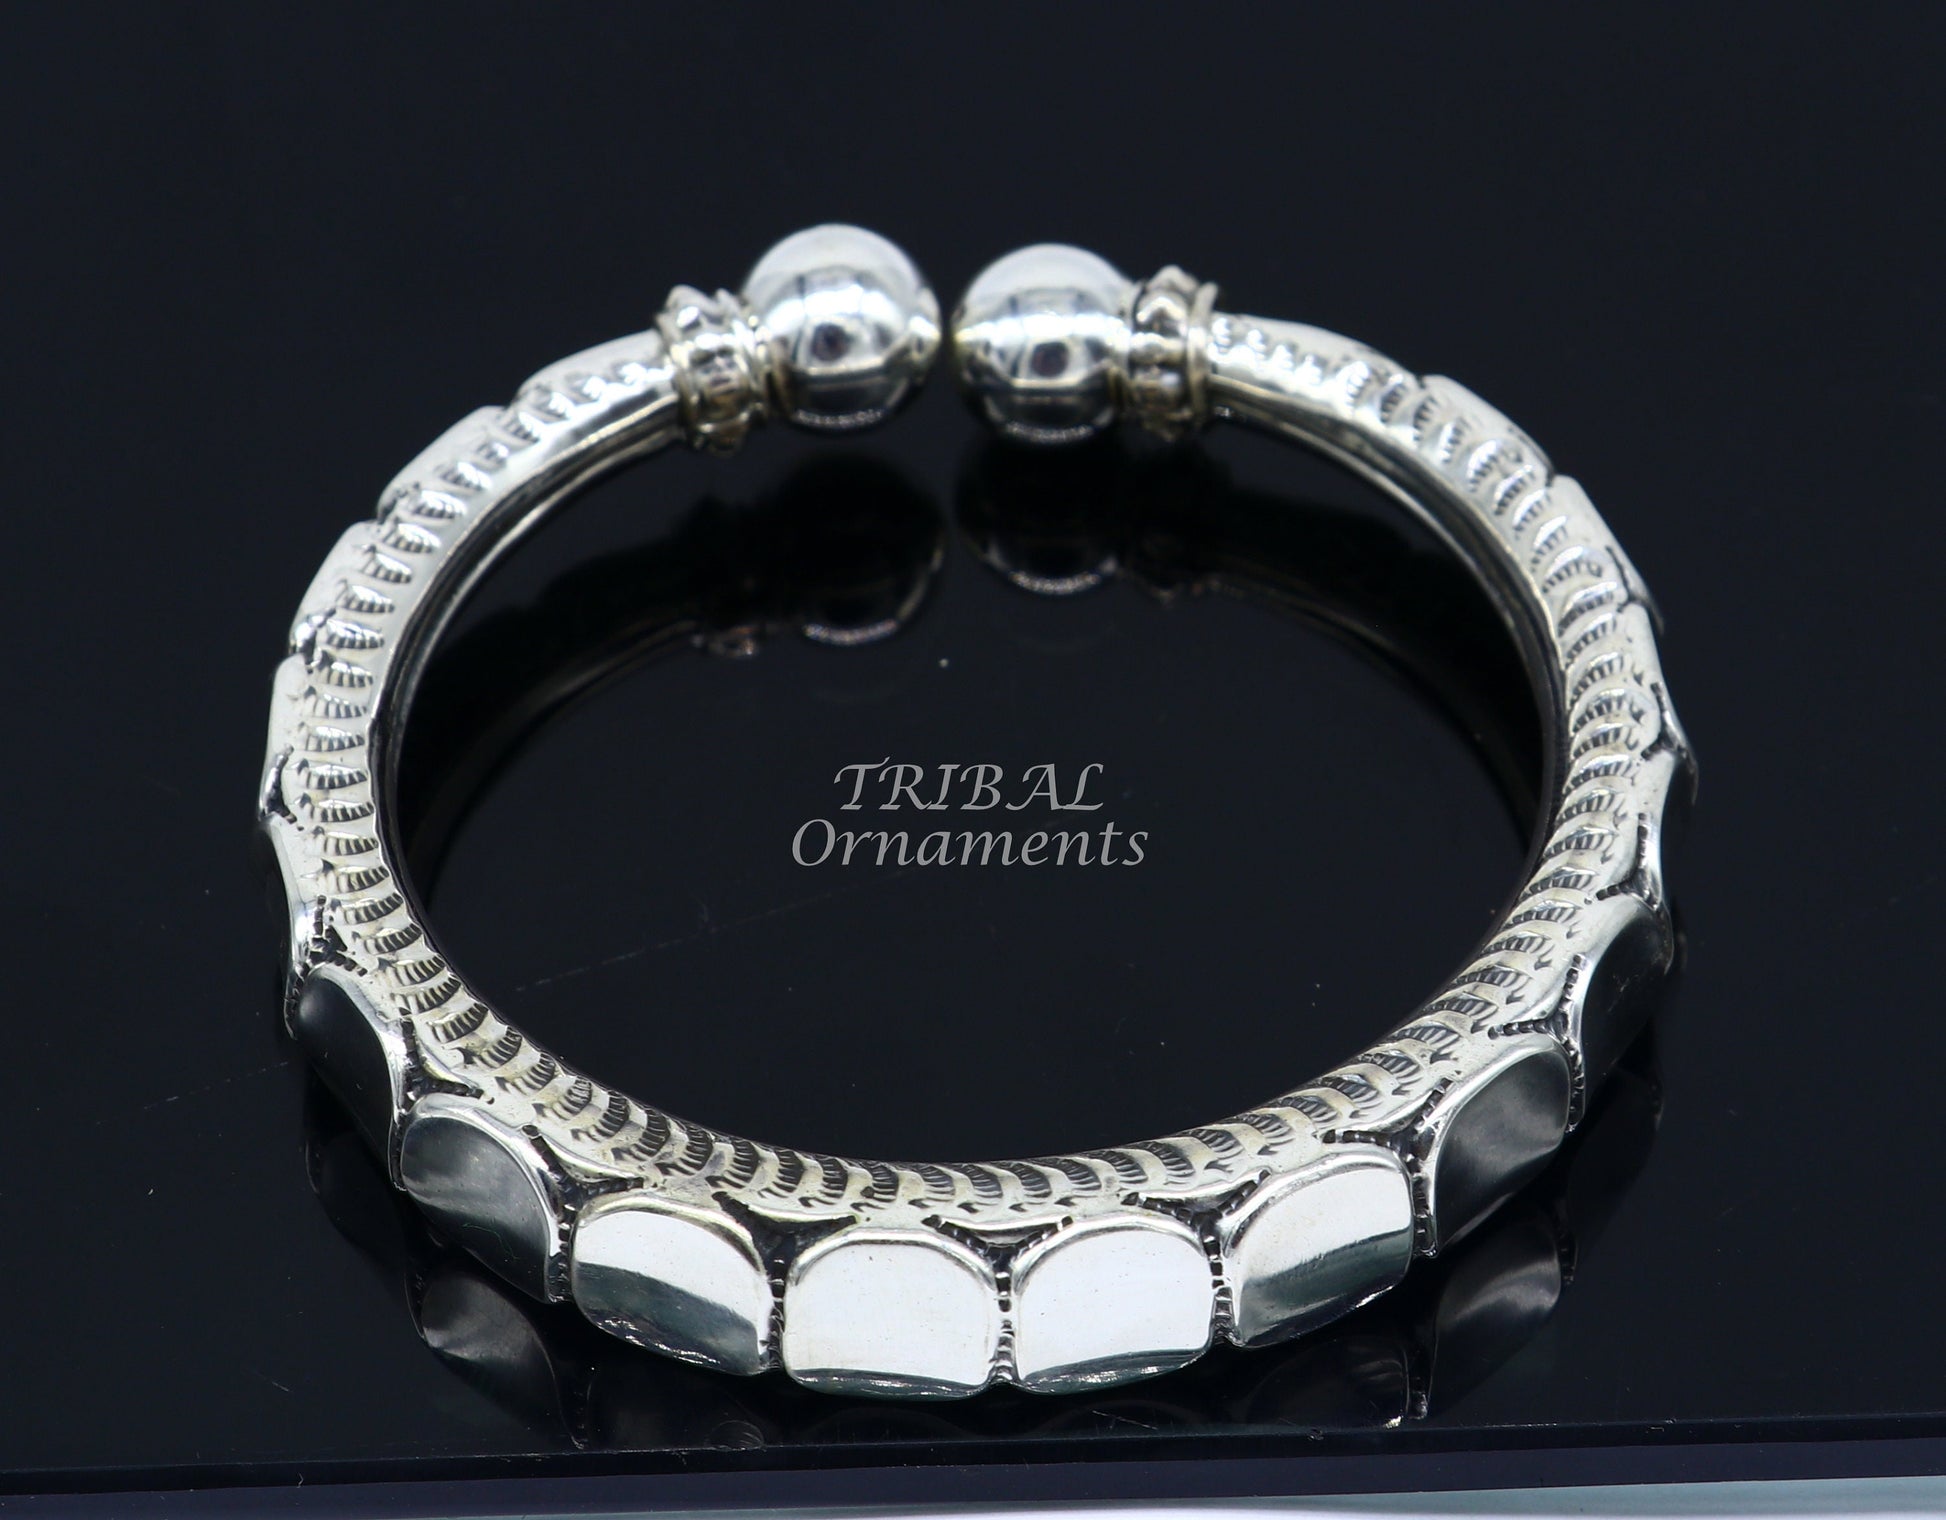 925 sterling silver handmade gorgeous customized work bangle bracelet kada, vintage antique design stylish bangle unisex jewelry nsk493 - TRIBAL ORNAMENTS